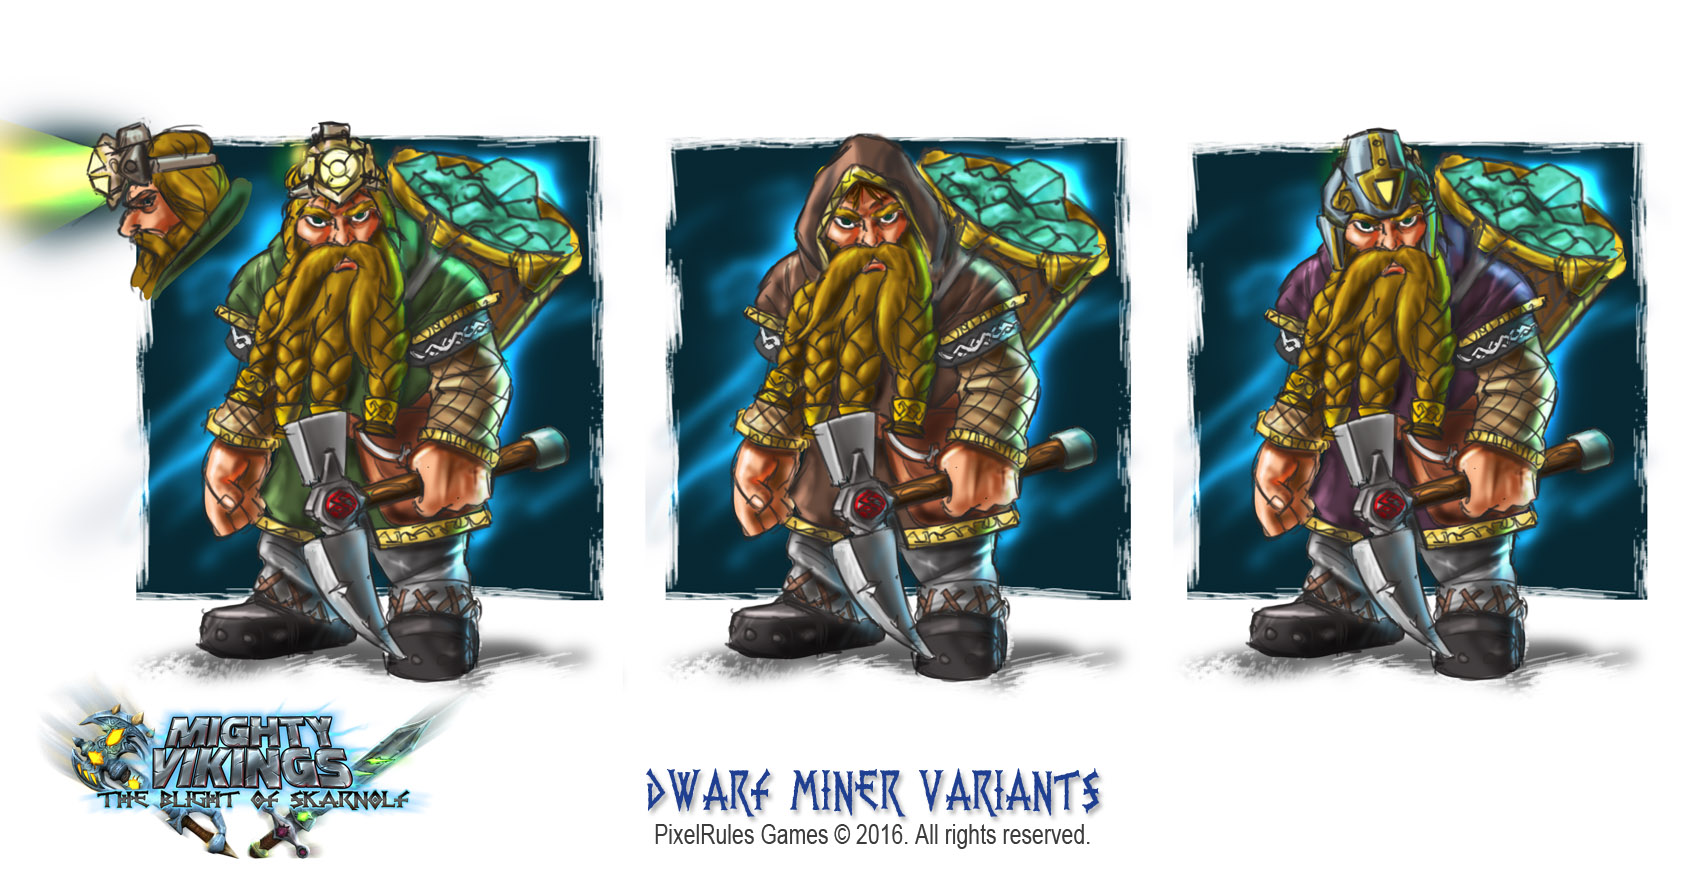 dwarf miner variants